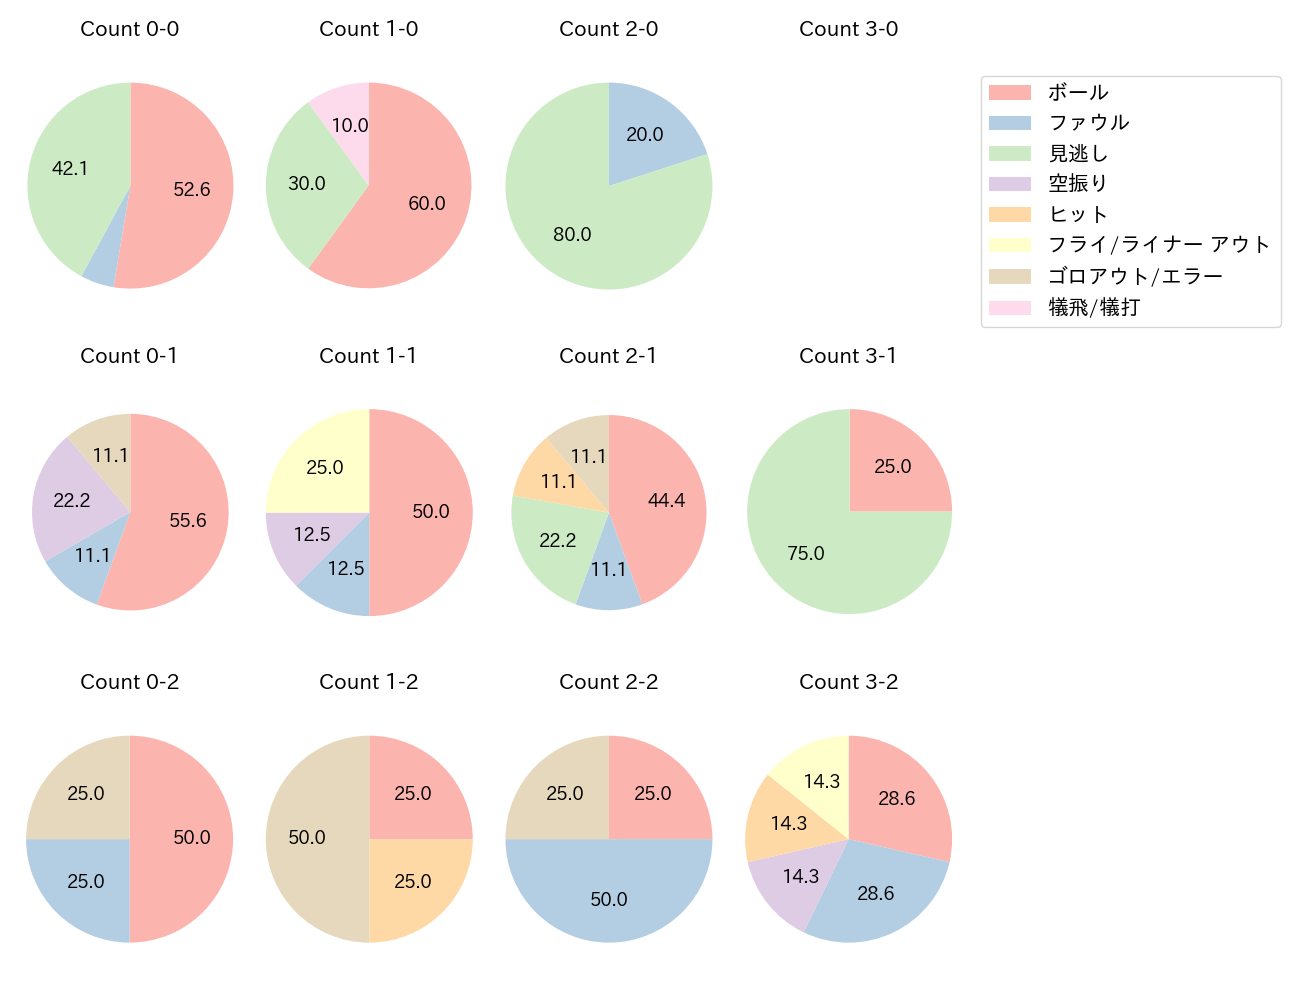 平沼 翔太の球数分布(2022年7月)